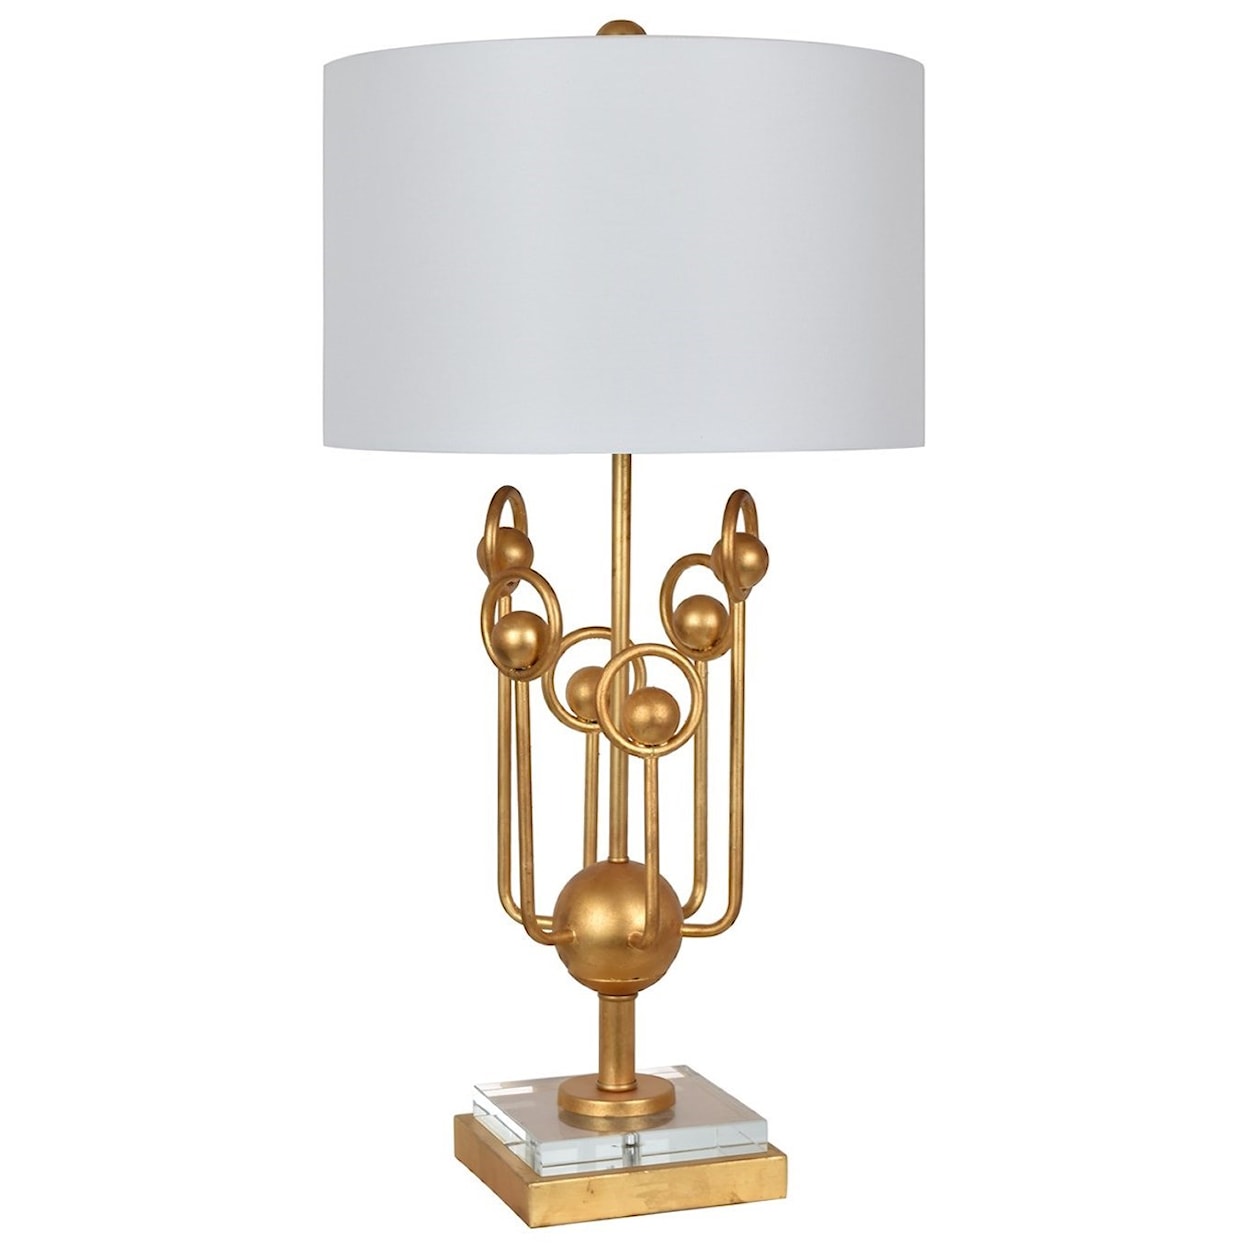 Crestview Collection Lighting Orbit Table Lamp